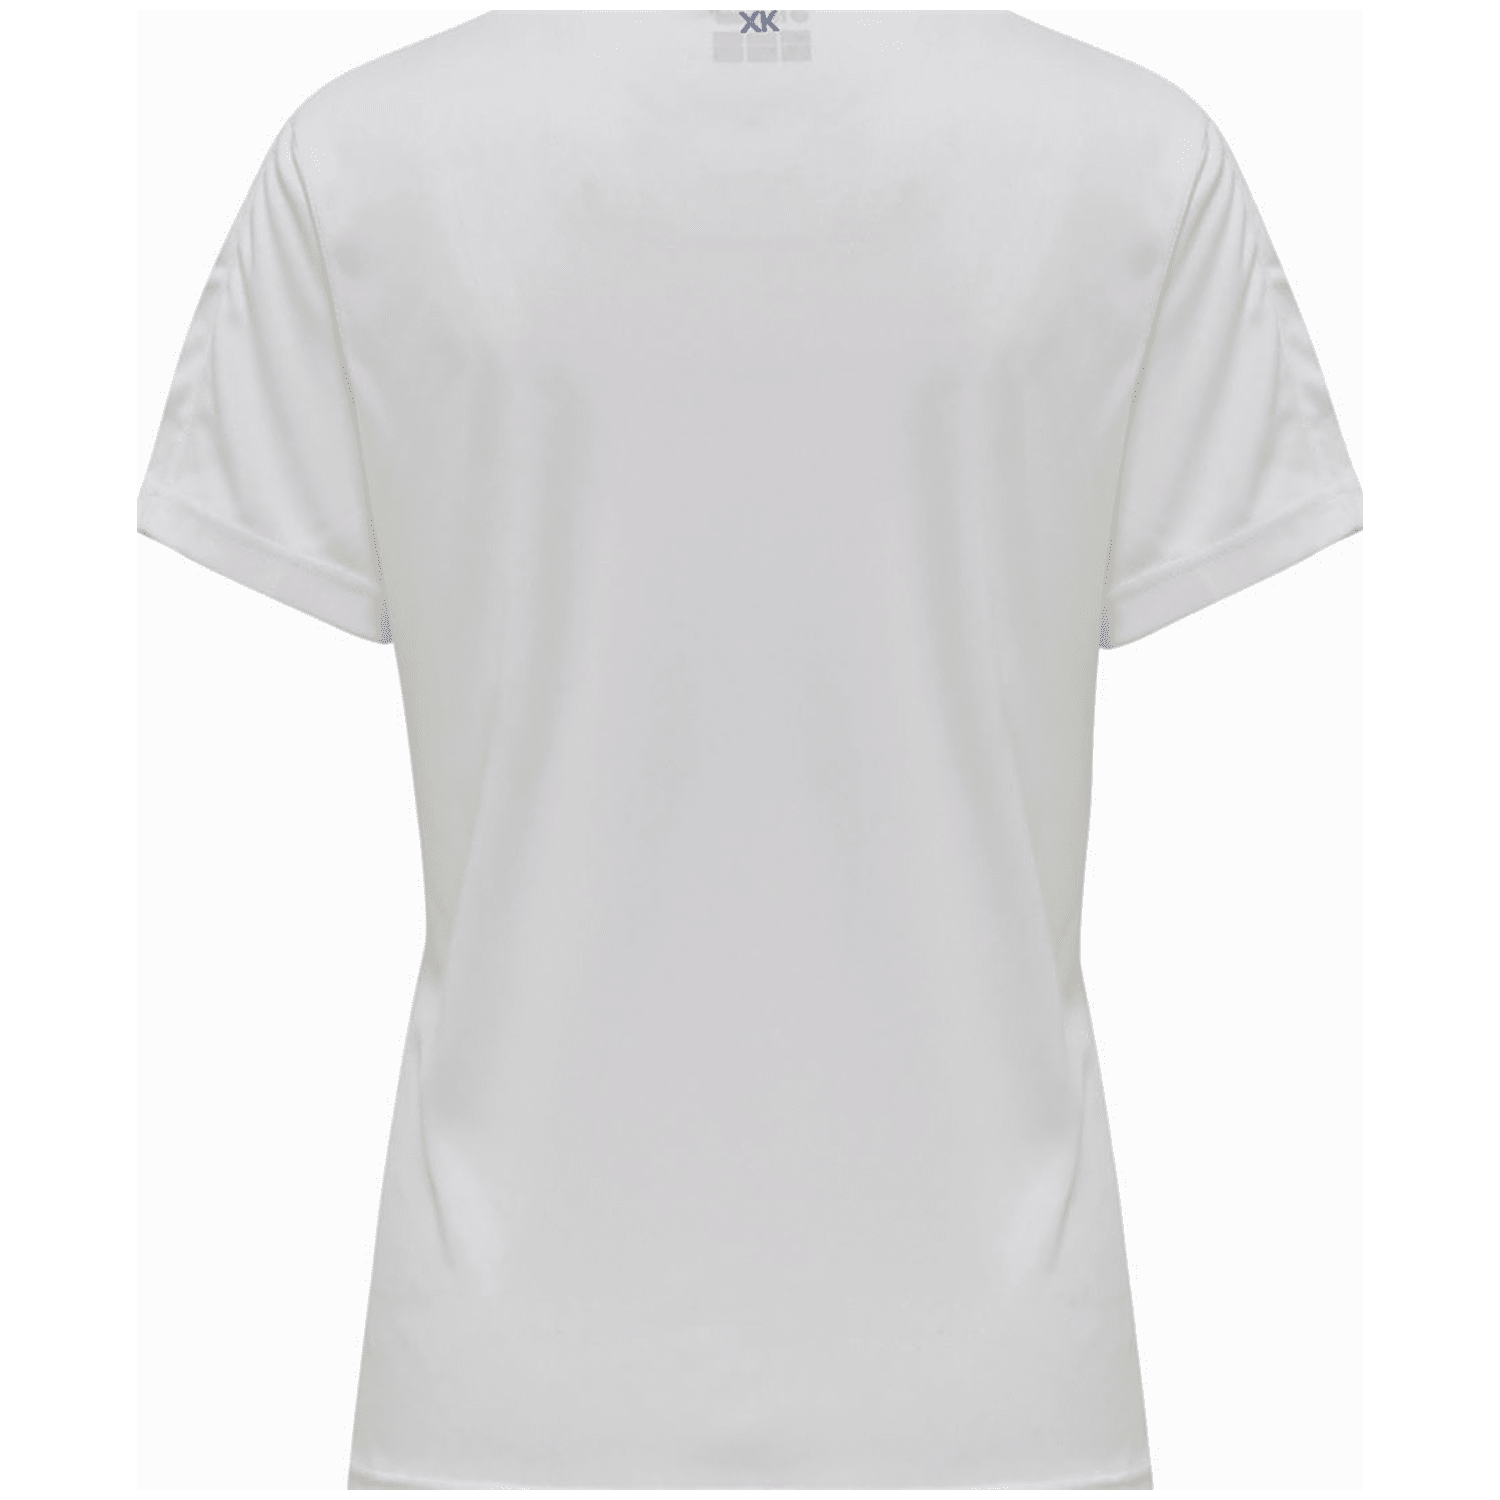 Hummel Core XK Poly Jersey Damen T-Shirt